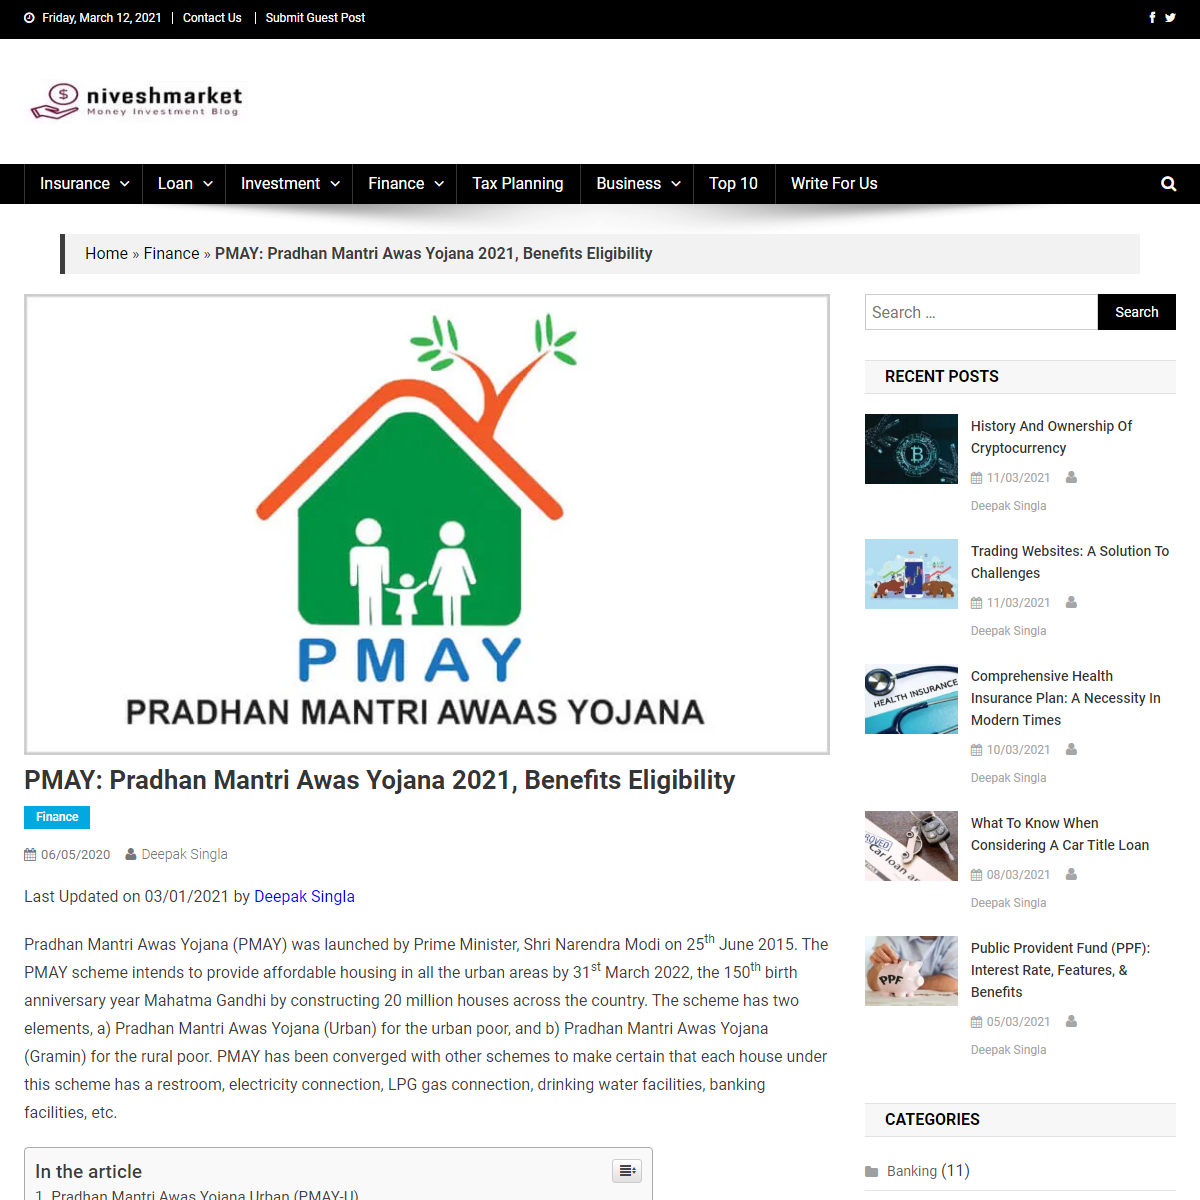 A complete backup of https://www.niveshmarket.com/pradhan-mantri-awas-yojana-pmay/